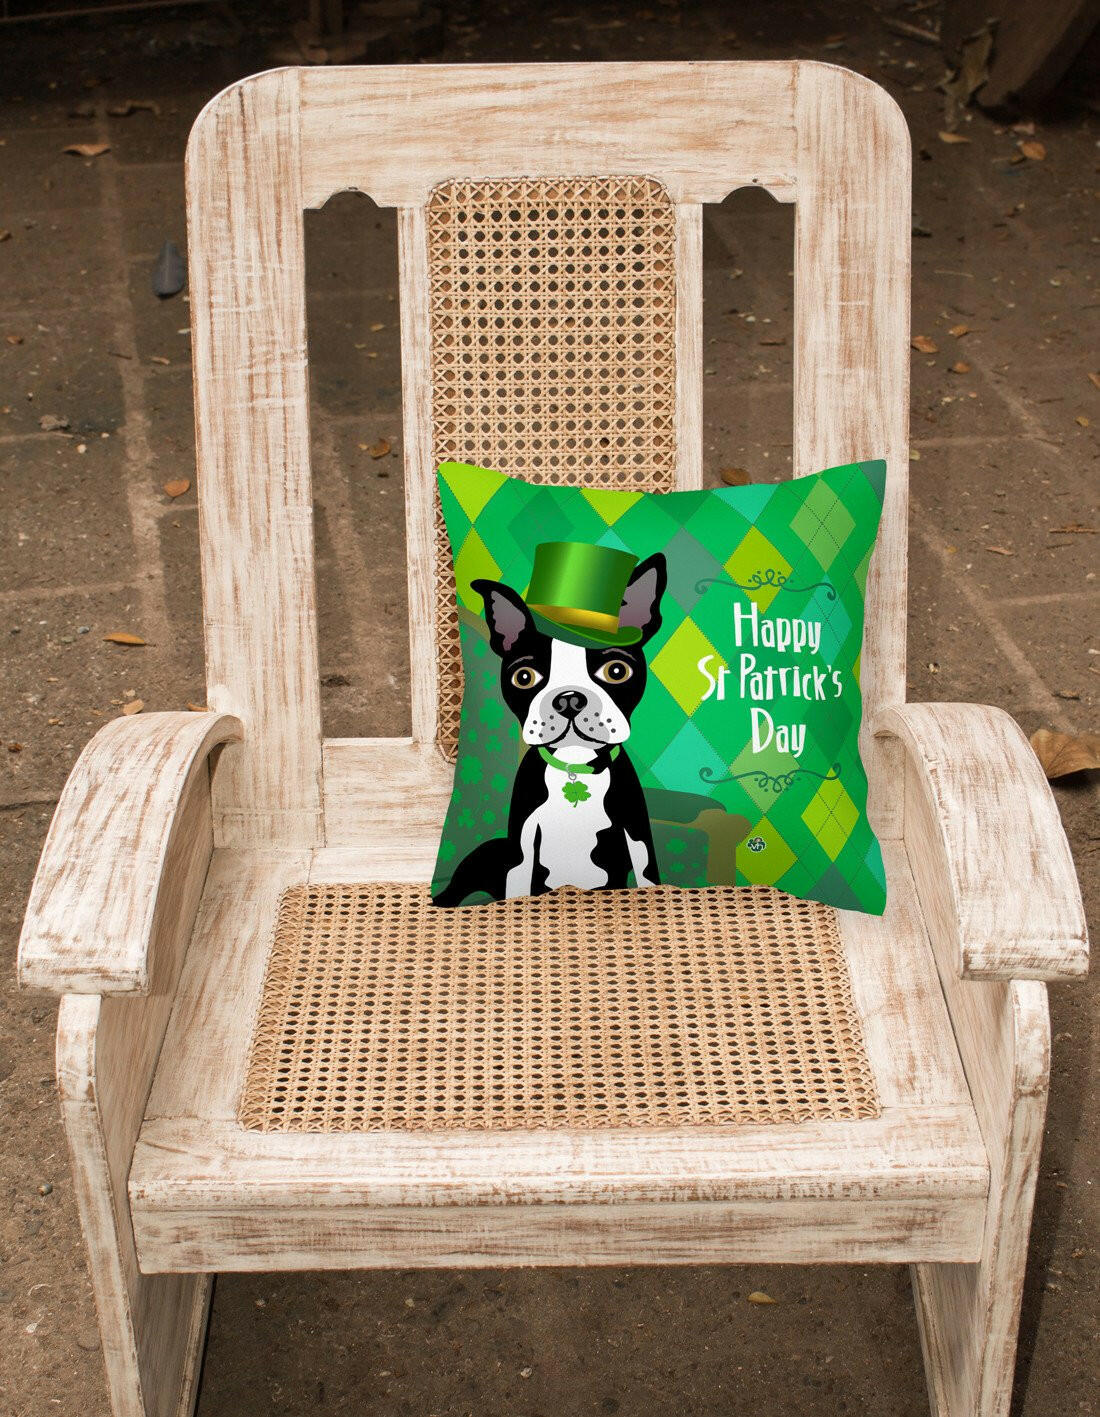 St Patrick's Day Boston Terrier Fabric Decorative Pillow VHA3006PW1414 by Caroline's Treasures